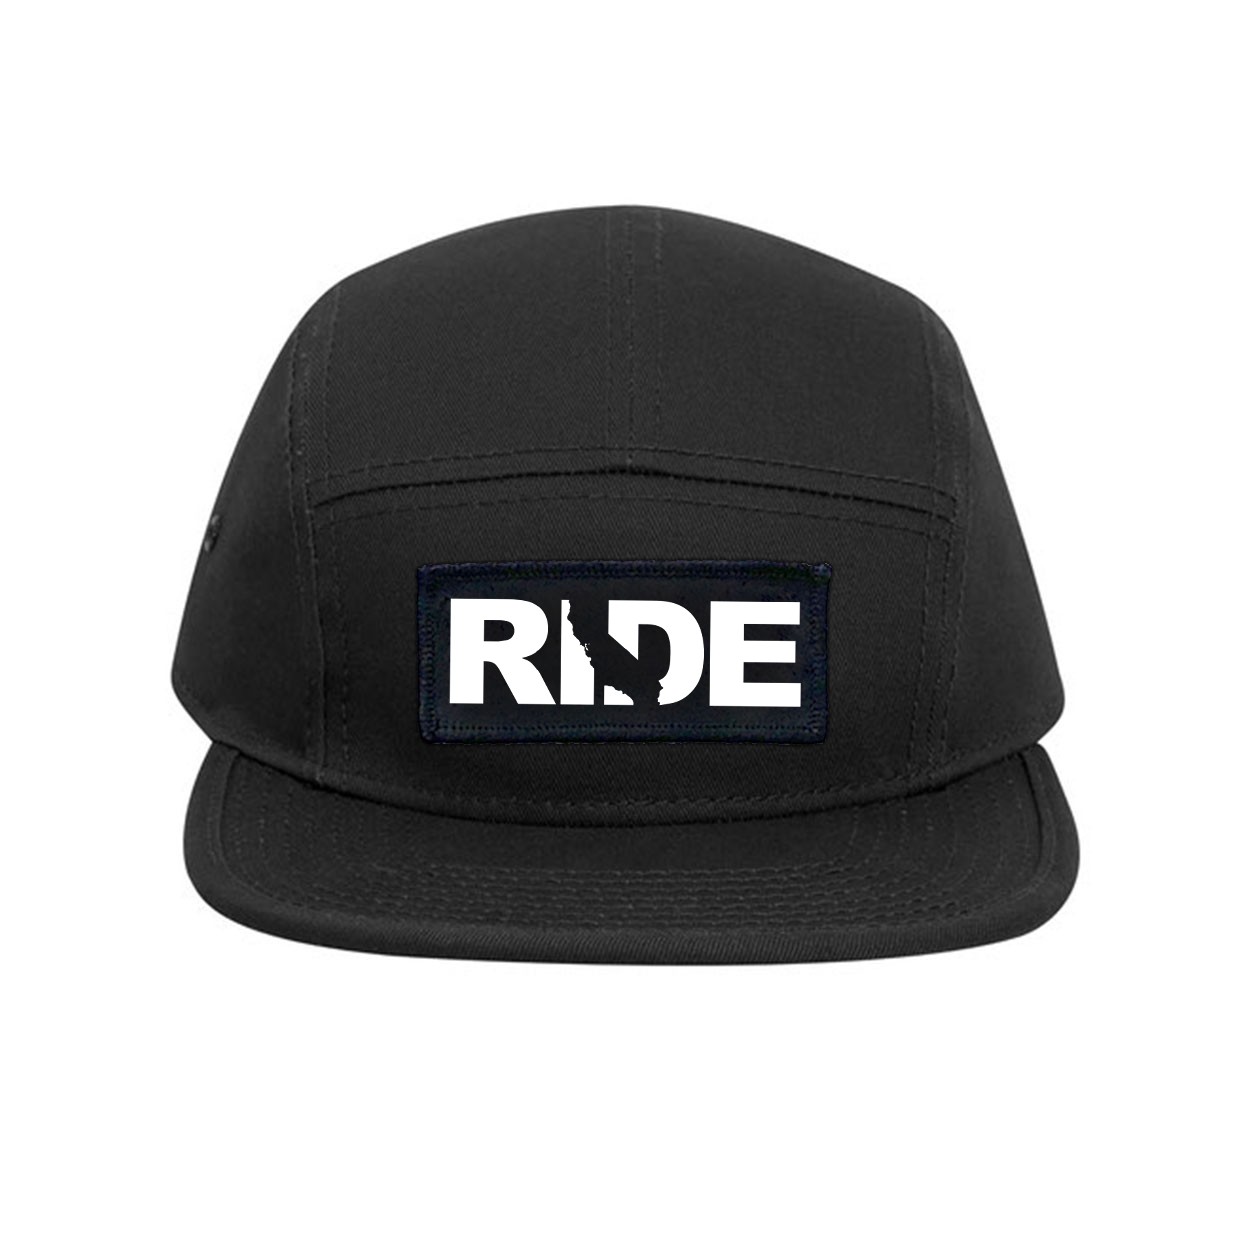 Ride California Classic Embroidered Snapback Trucker Hat Black